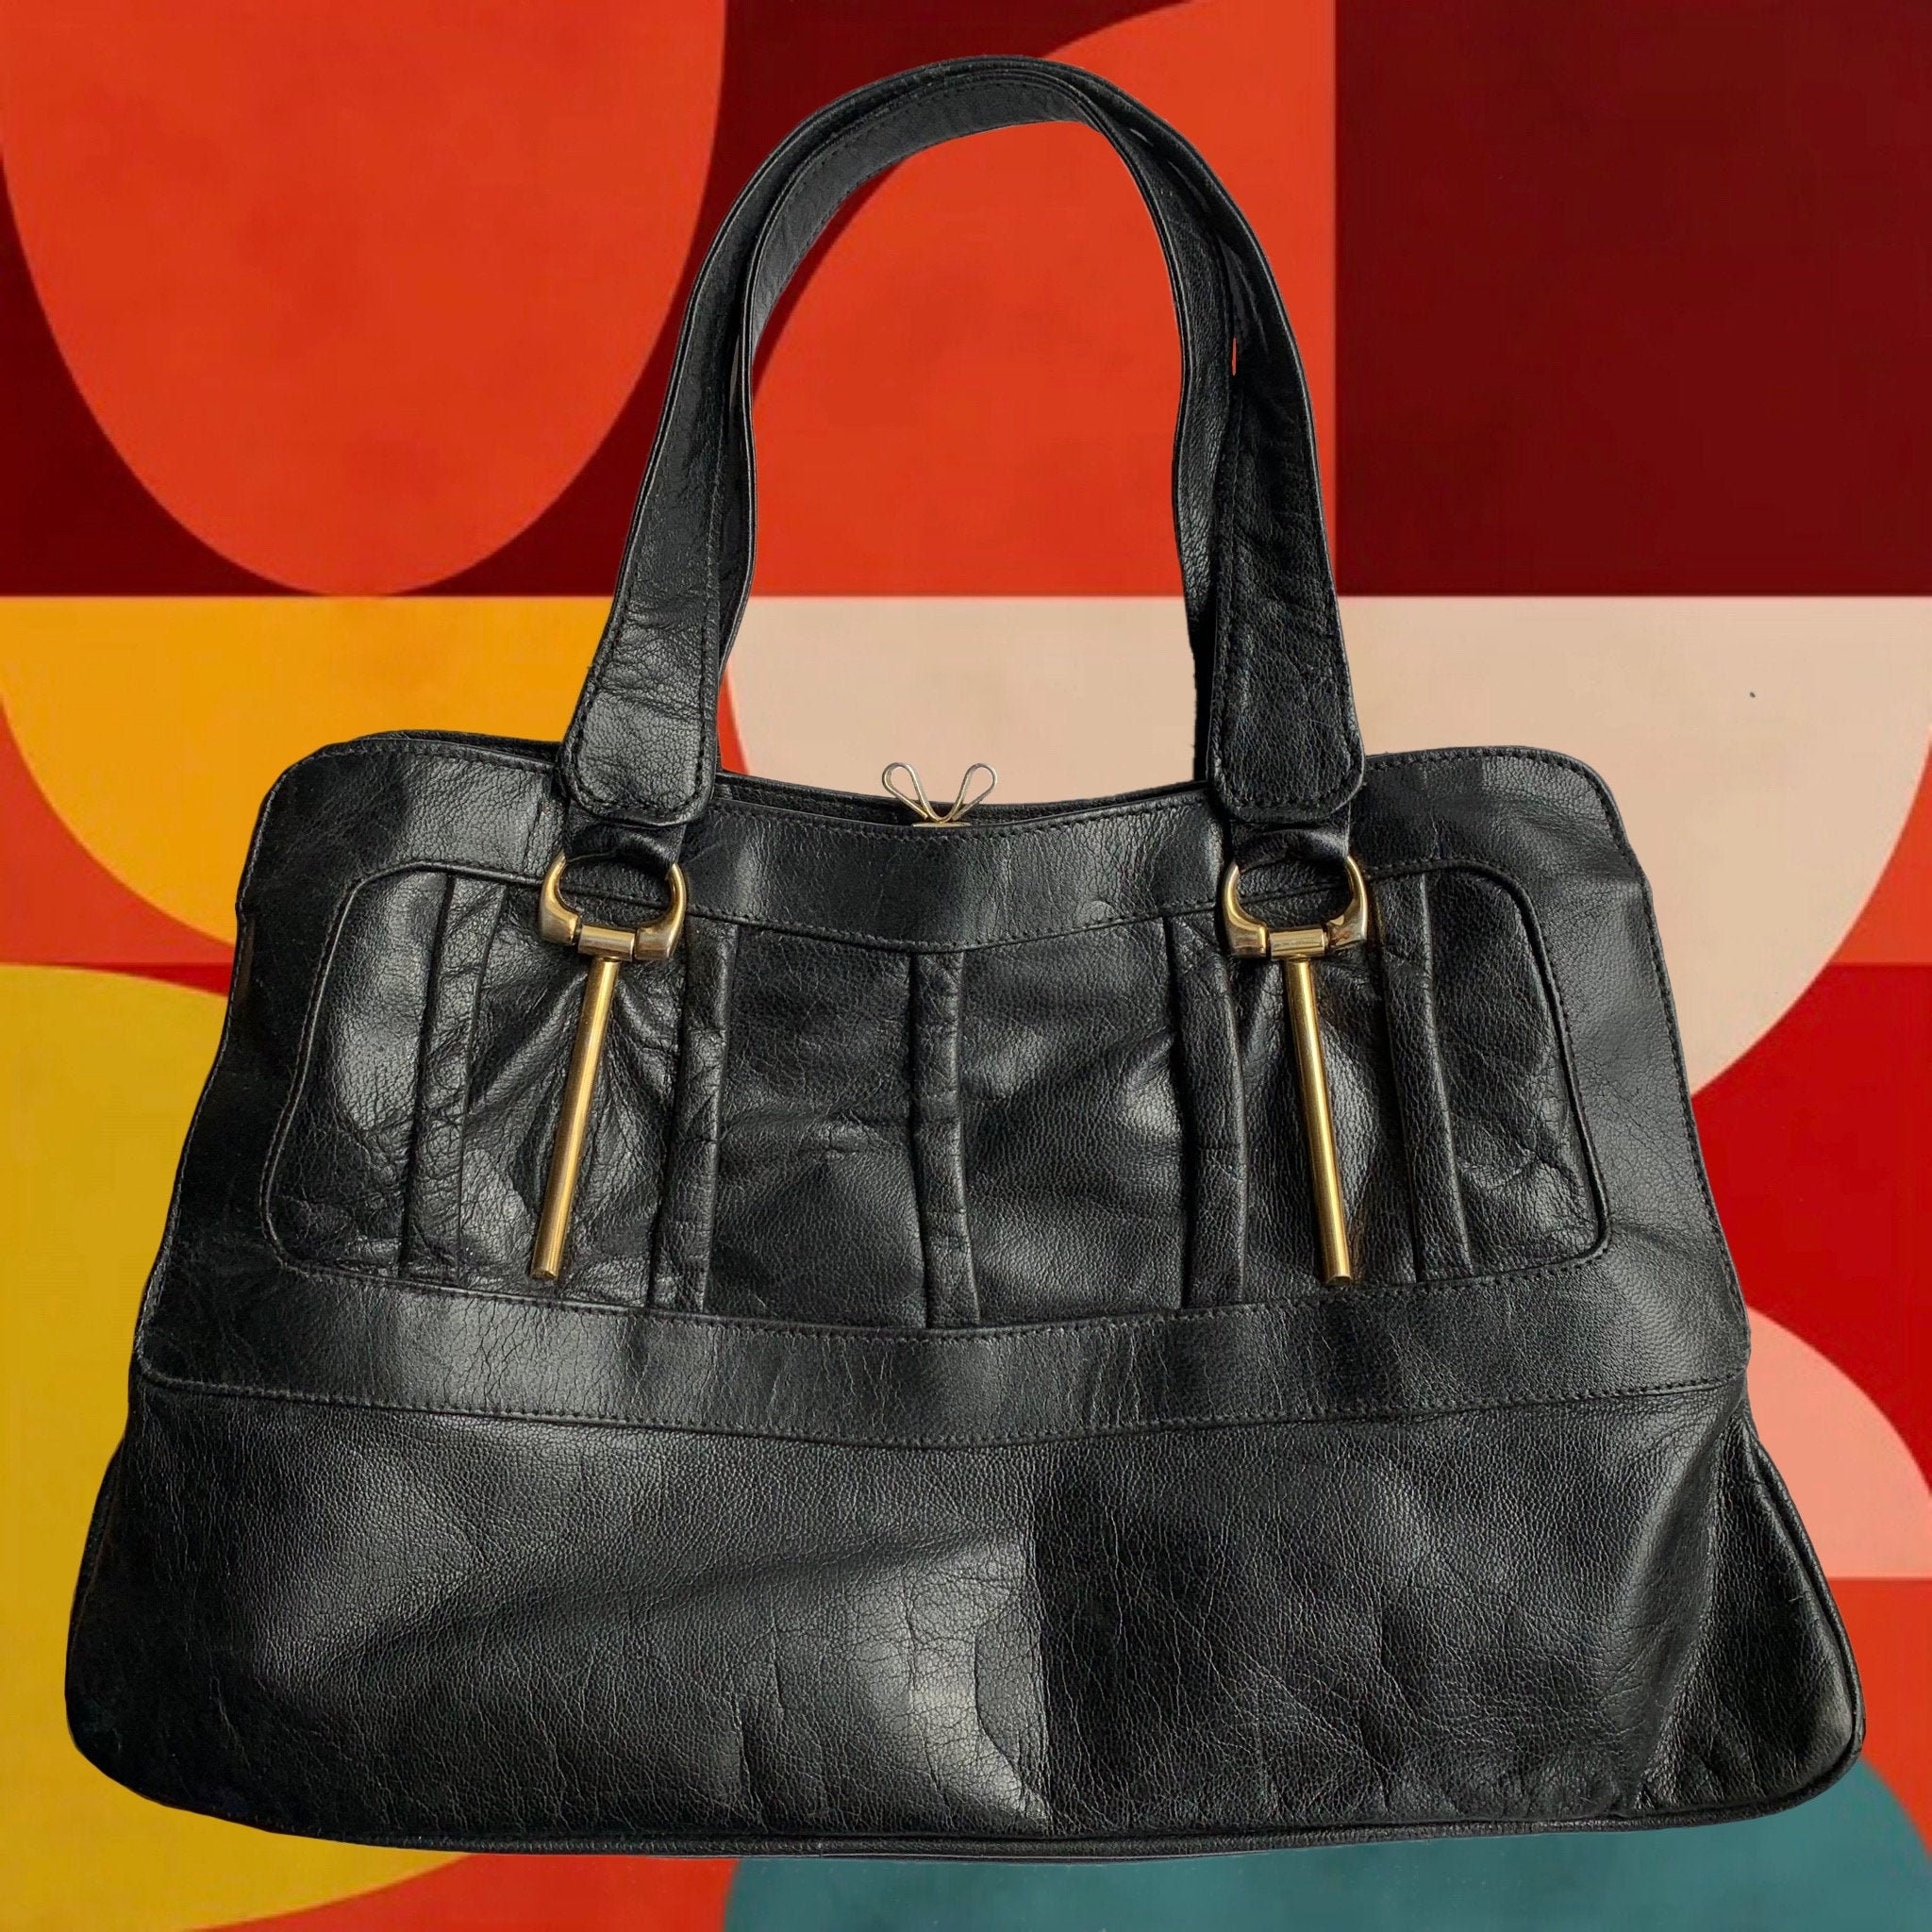 Dasein Italian Genuine Leather Handbag for Women Clutch Evening Bag Gold Chain Strap Shoulder Bag Crossbody Purse